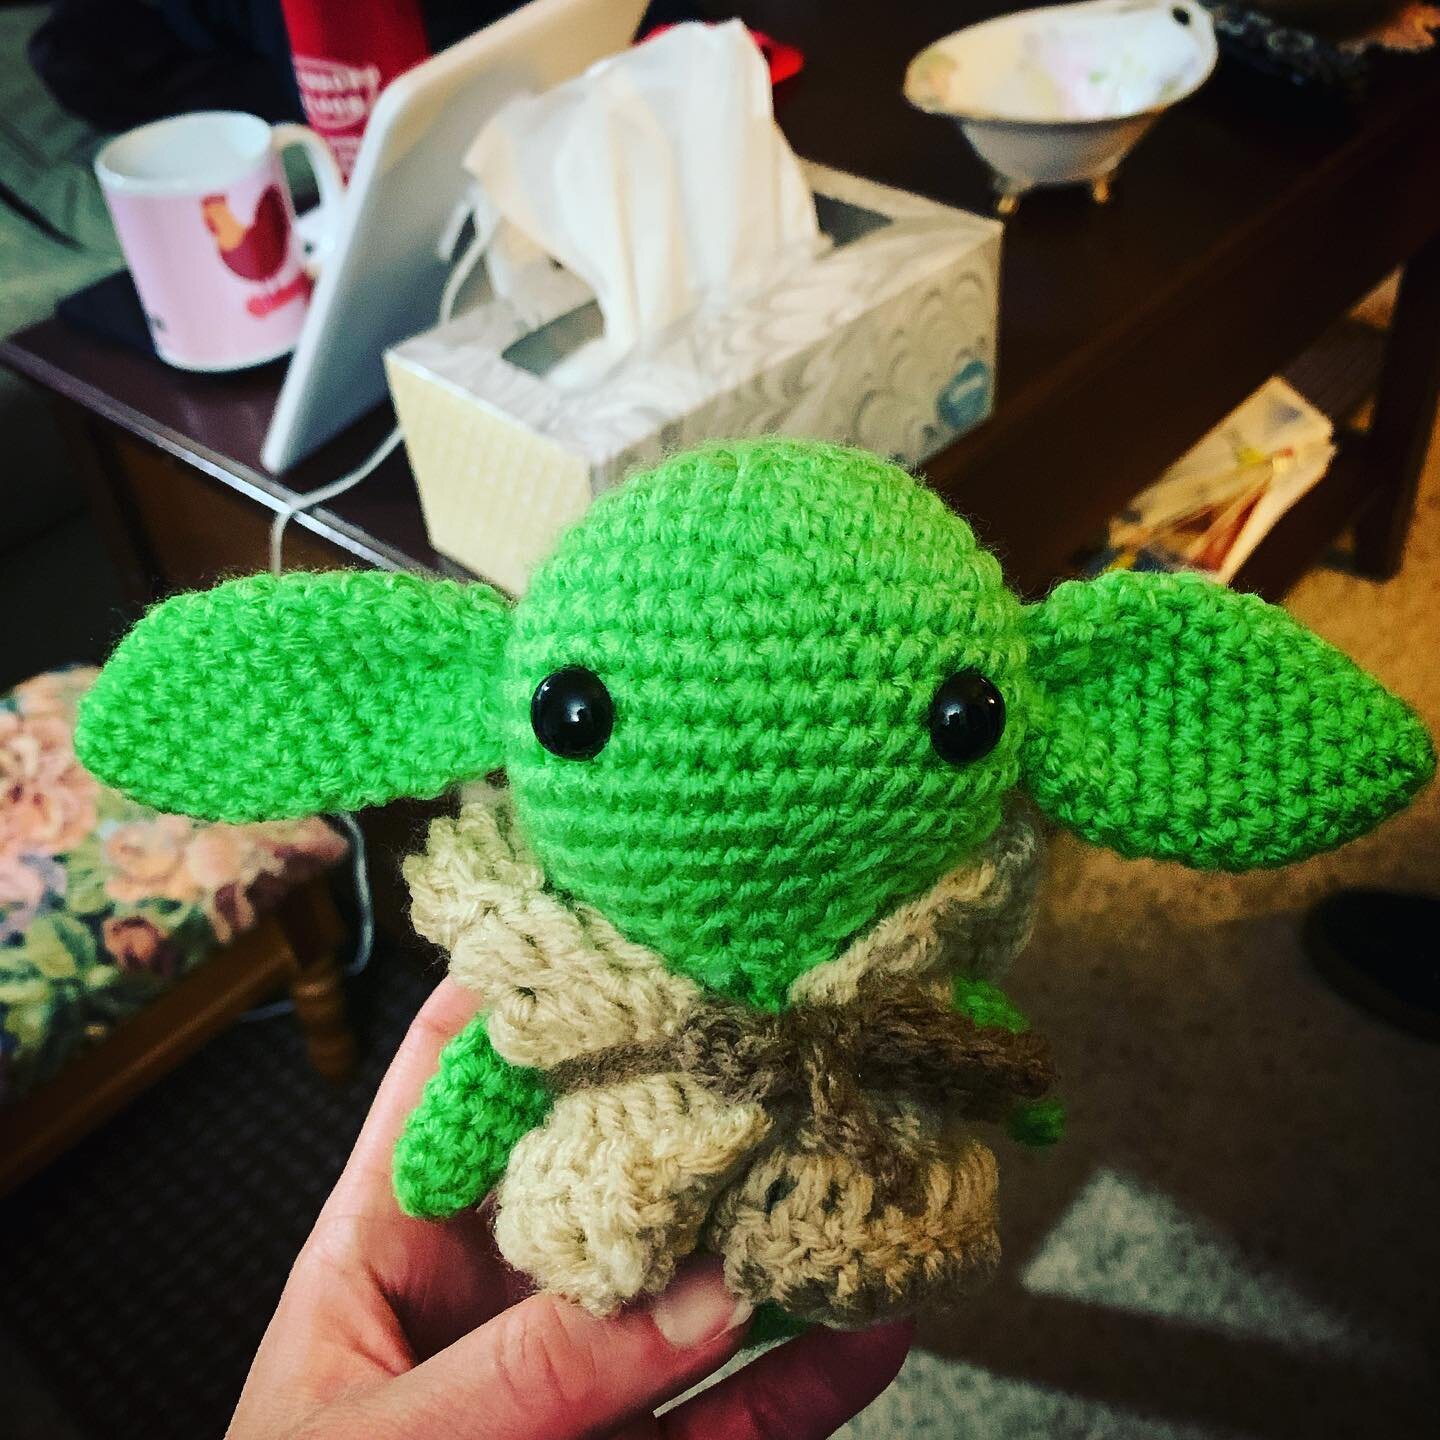 OMG my mom makes crochet Baby Yoda dolls, and they are adorable! #babyyoda #crochetstarwars #starwarsart